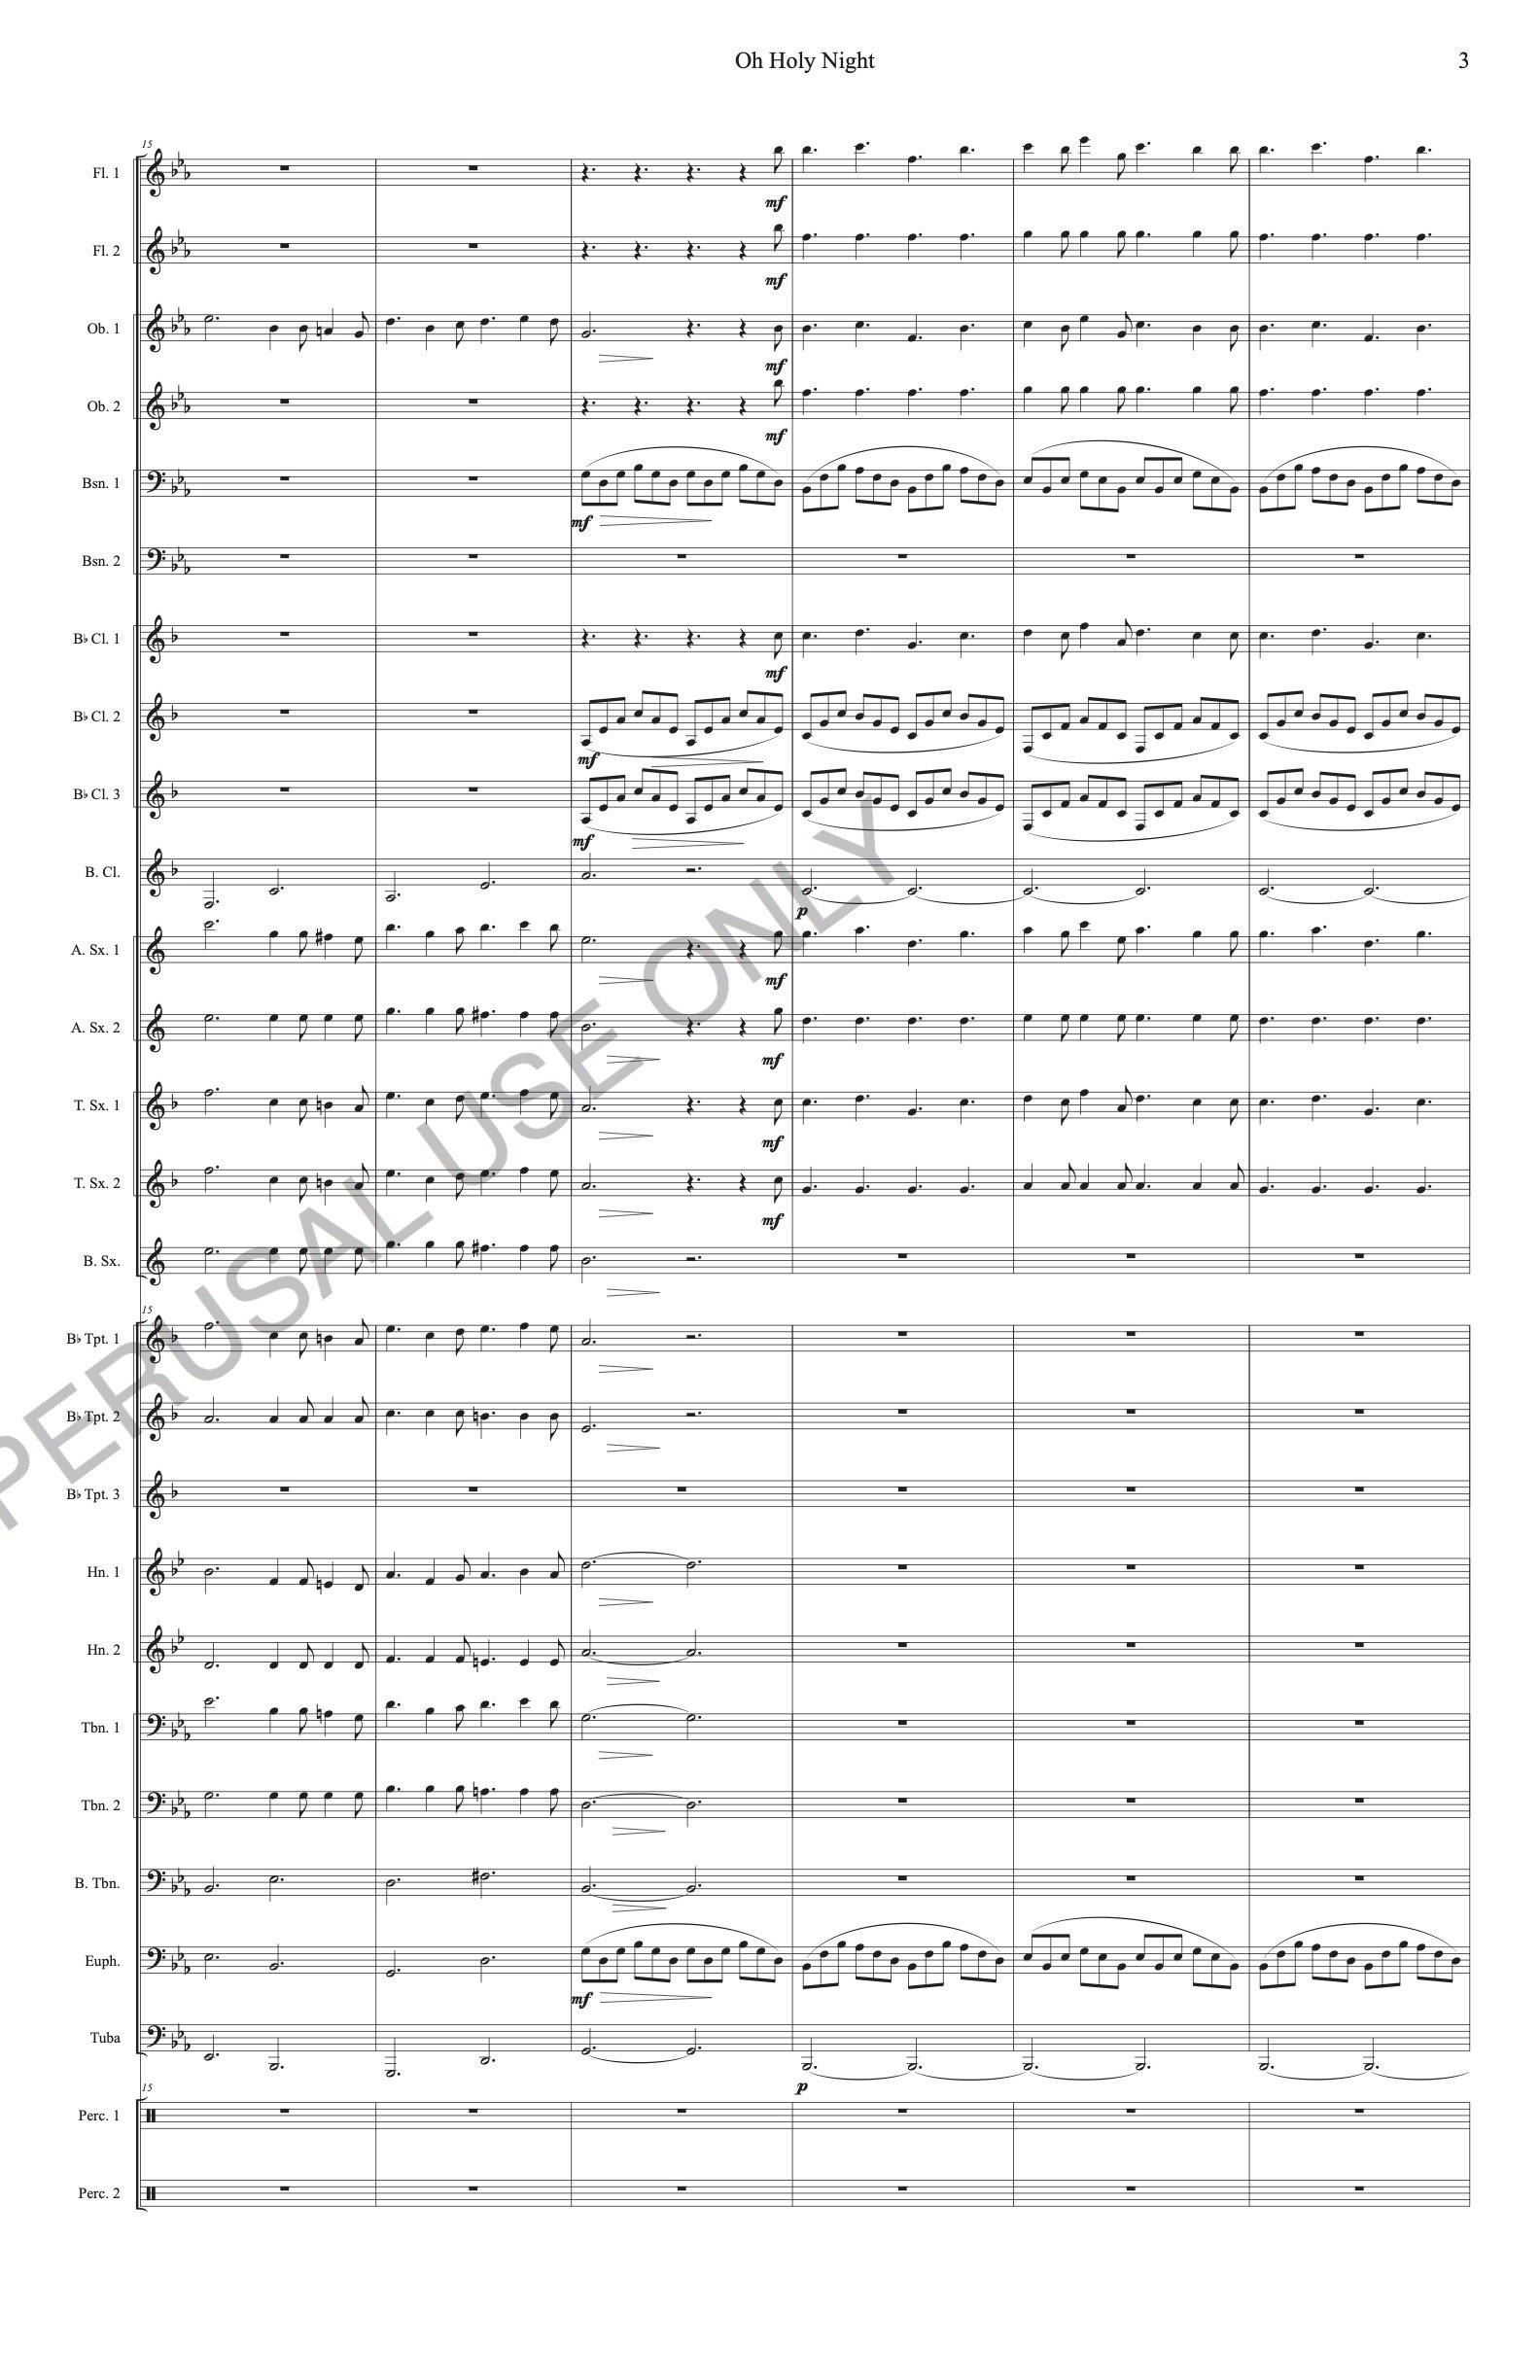 Concert Band sheet music: Oh Holy Night - a Magical Christmas Music - ChaipruckMekara